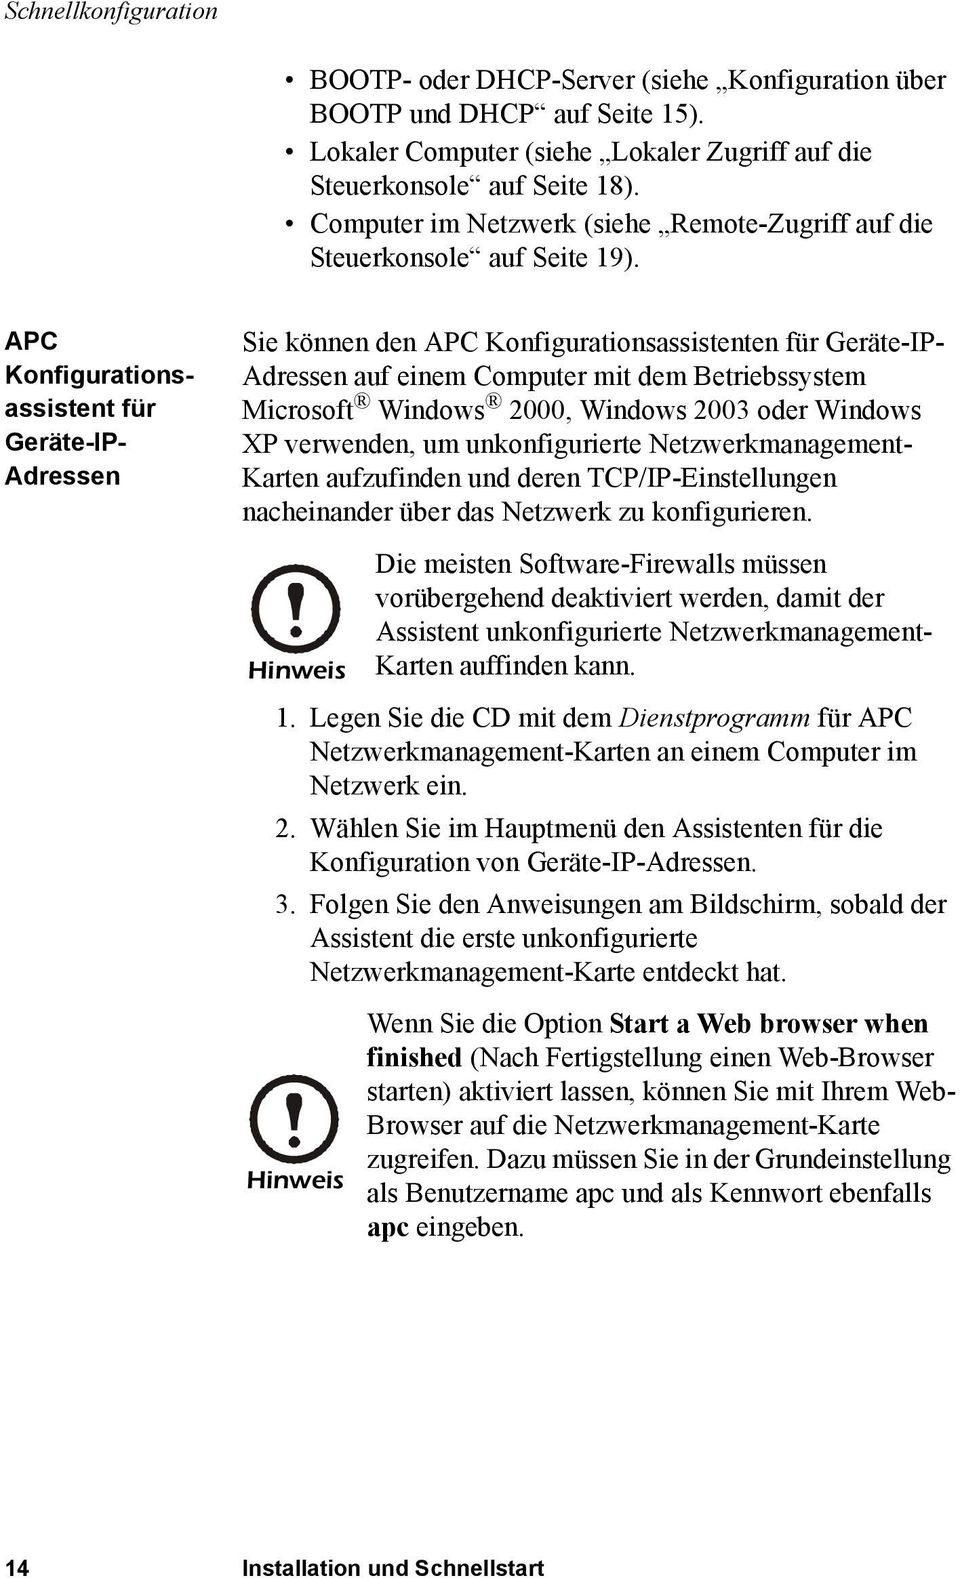 APC Konfigurationsassistent für Geräte-IP- Adressen Sie können den APC Konfigurationsassistenten für Geräte-IP- Adressen auf einem Computer mit dem Betriebssystem Microsoft Windows 2000, Windows 2003